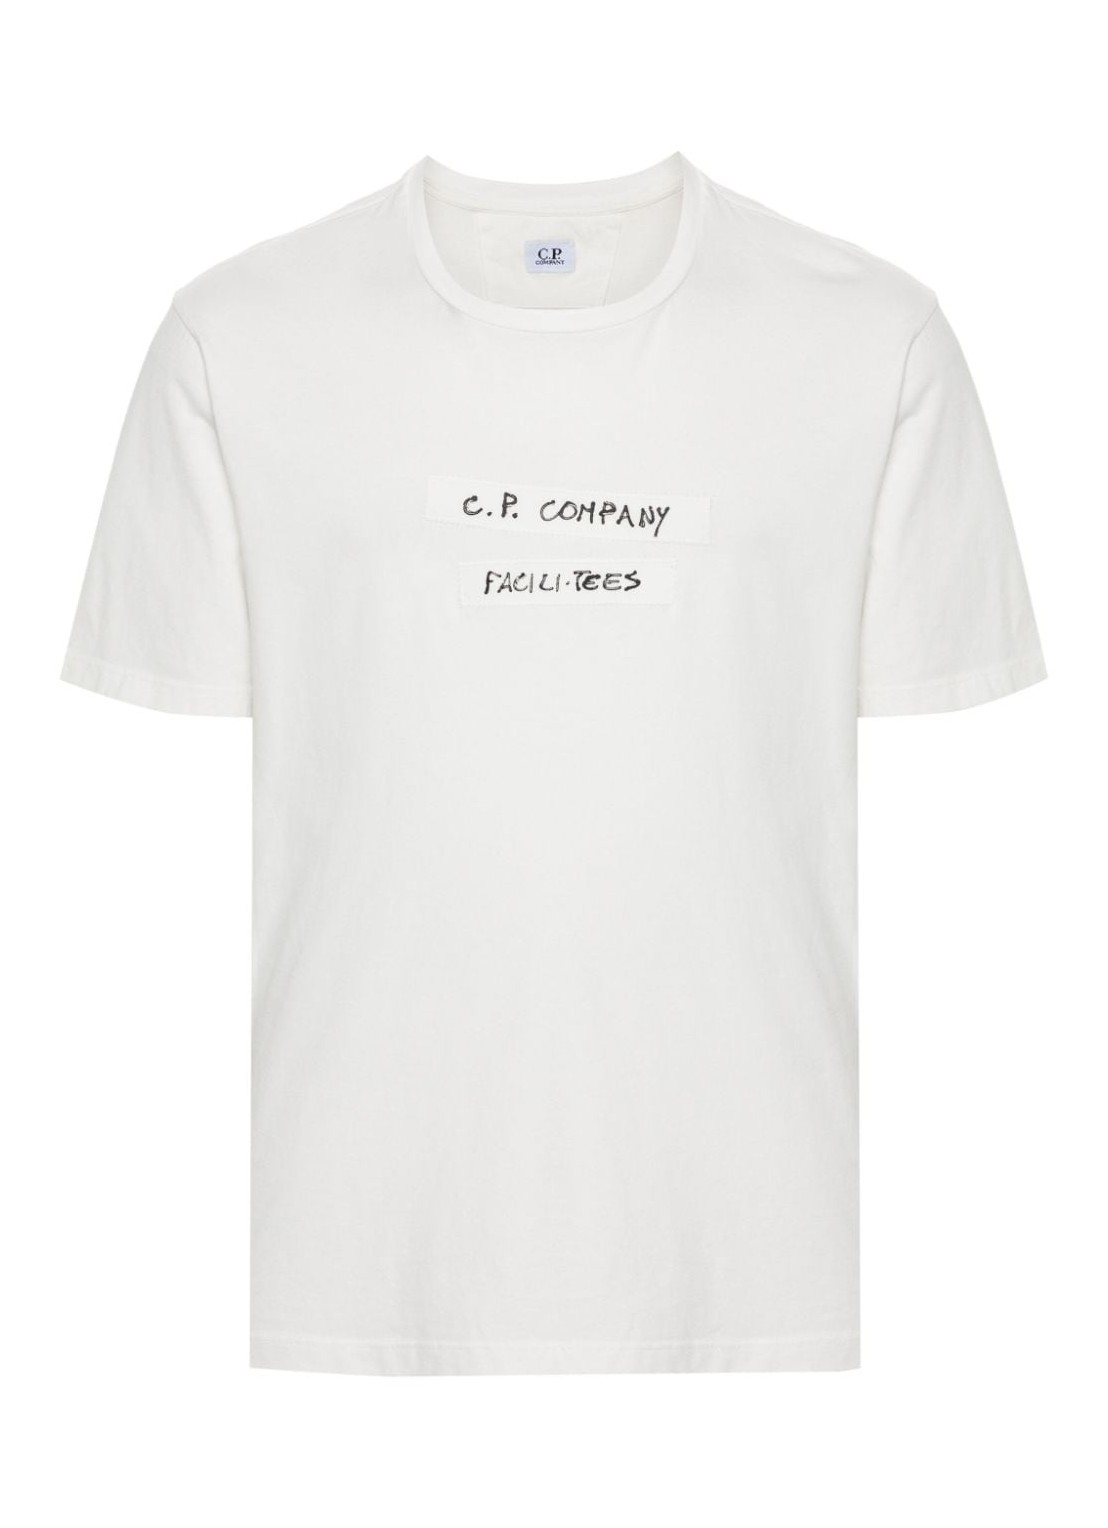 Camiseta c.p.company t-shirt man24/1 jersey facili-tees graphic t-shirt - 16cmts289a005431g 103 tall